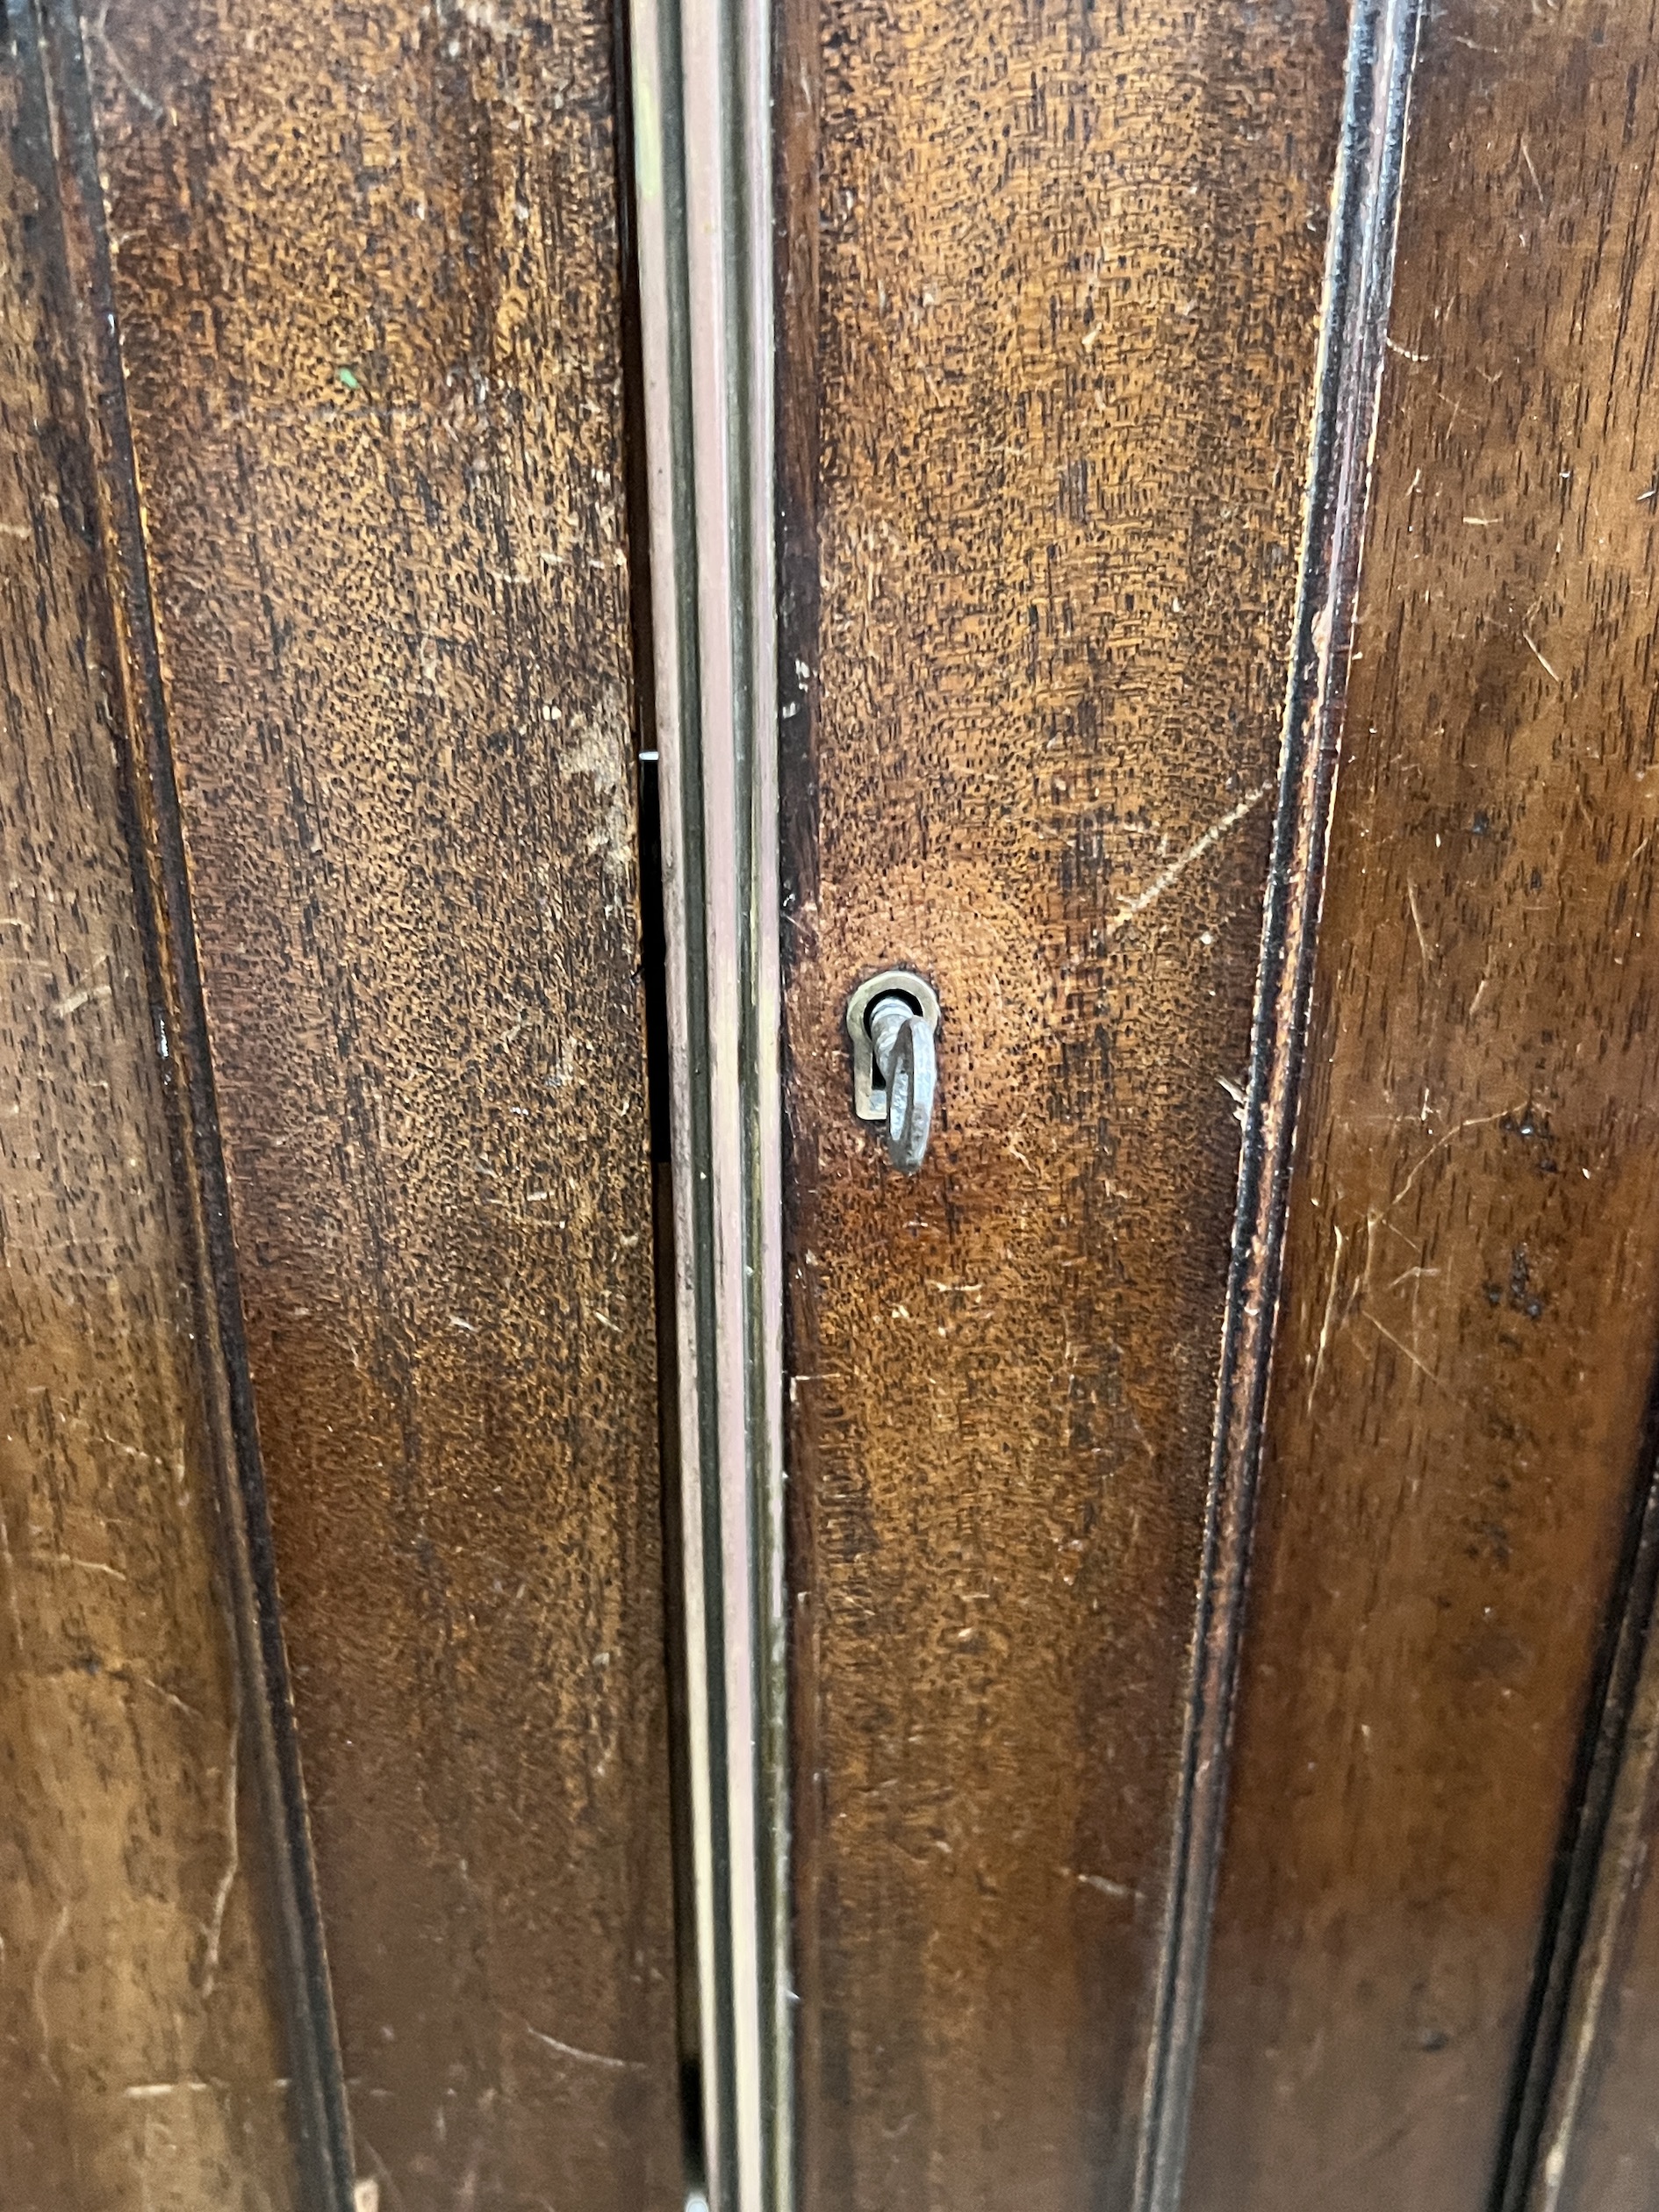 An Edwardian George III style mahogany two door wardrobe, width 132cm, depth 50cm, height 195cm